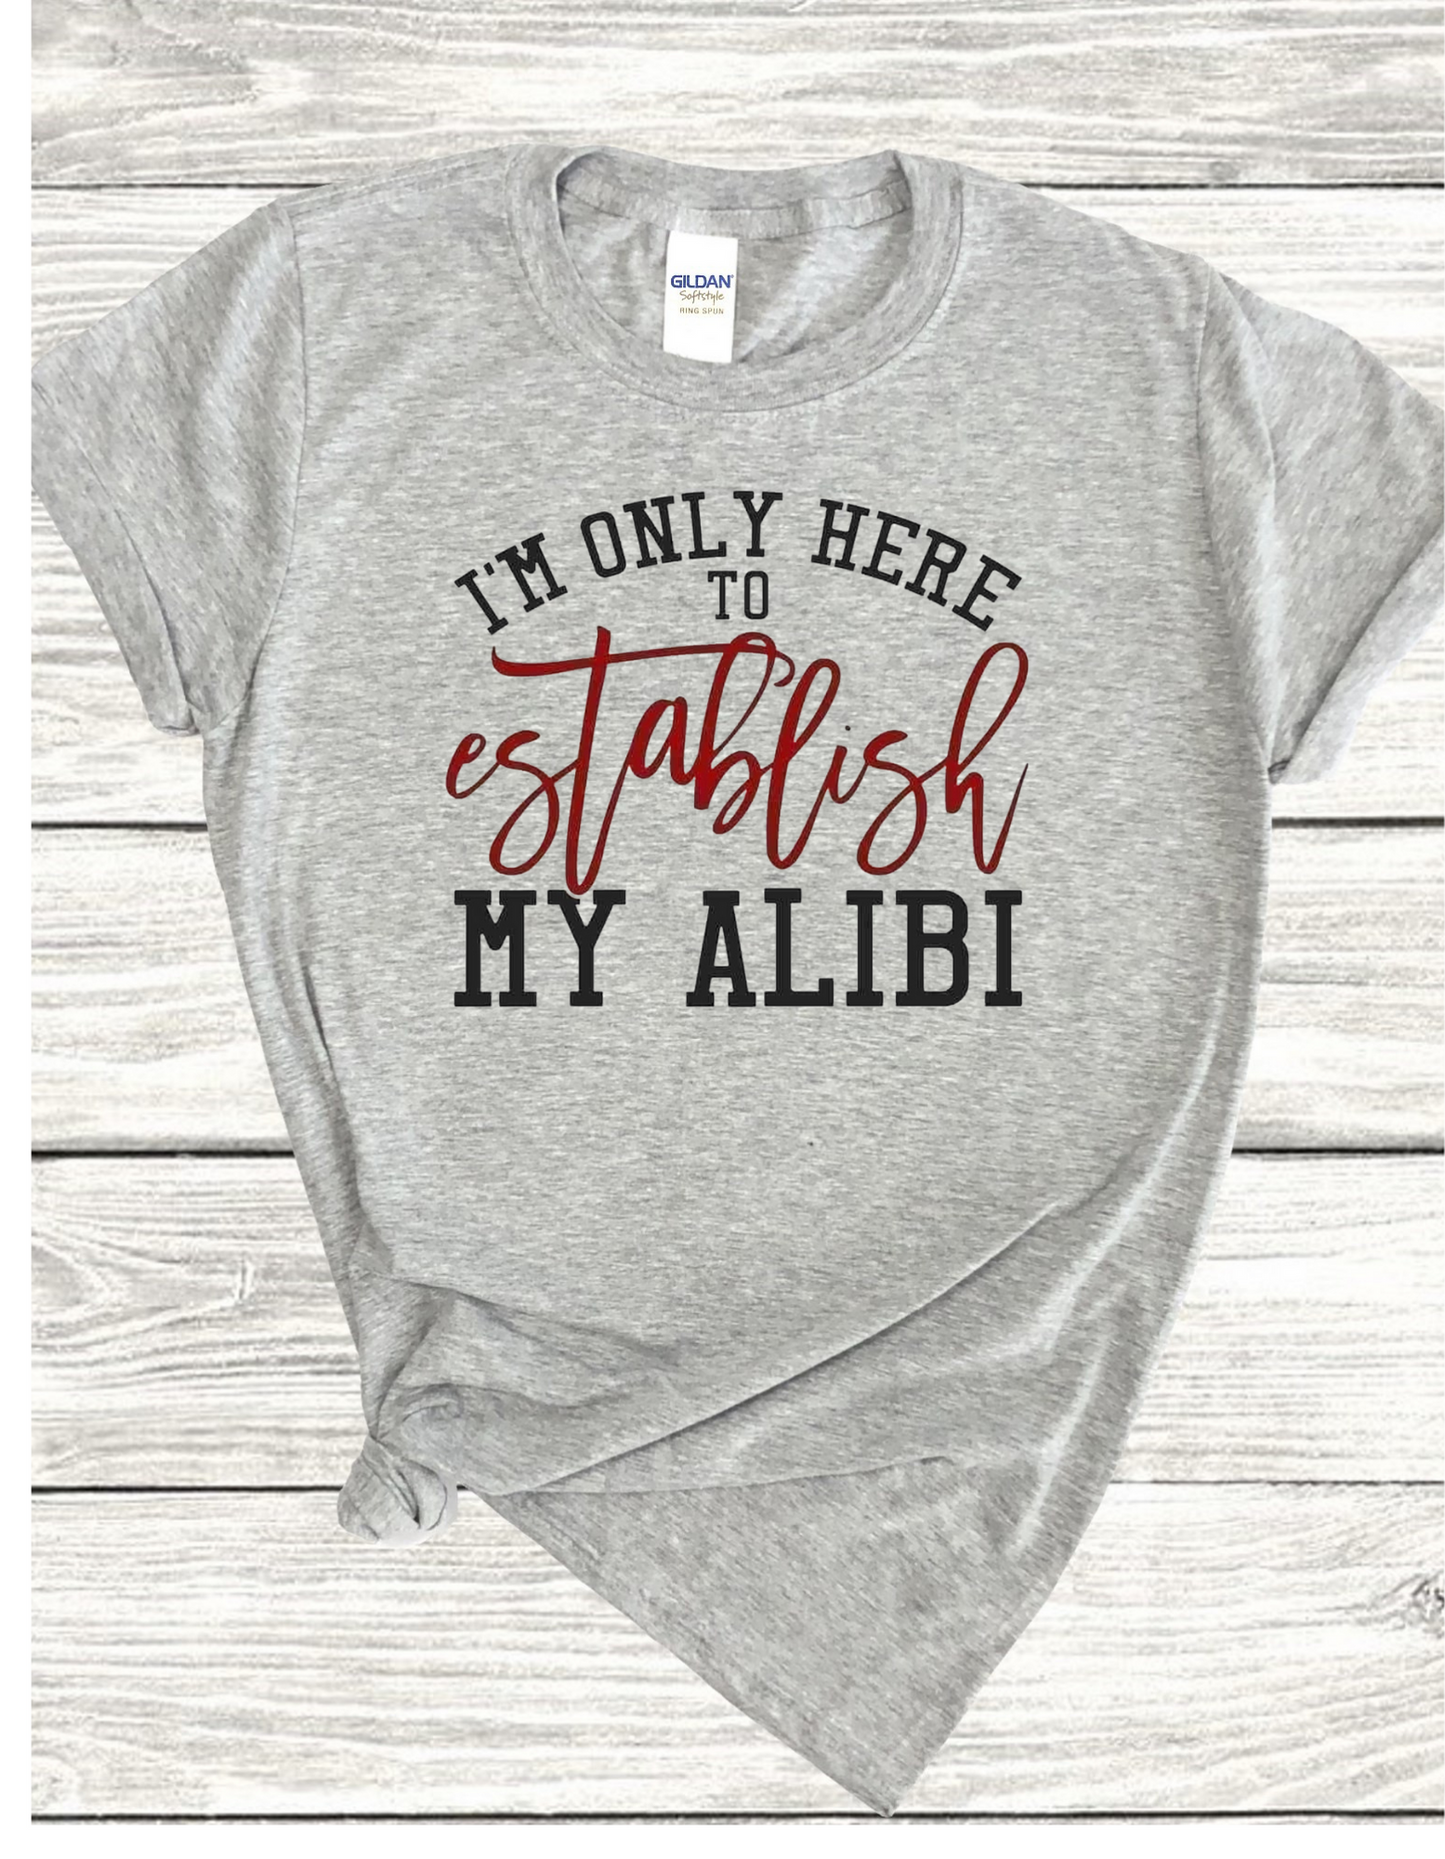 Only Here to Establish an Alibi TShirt